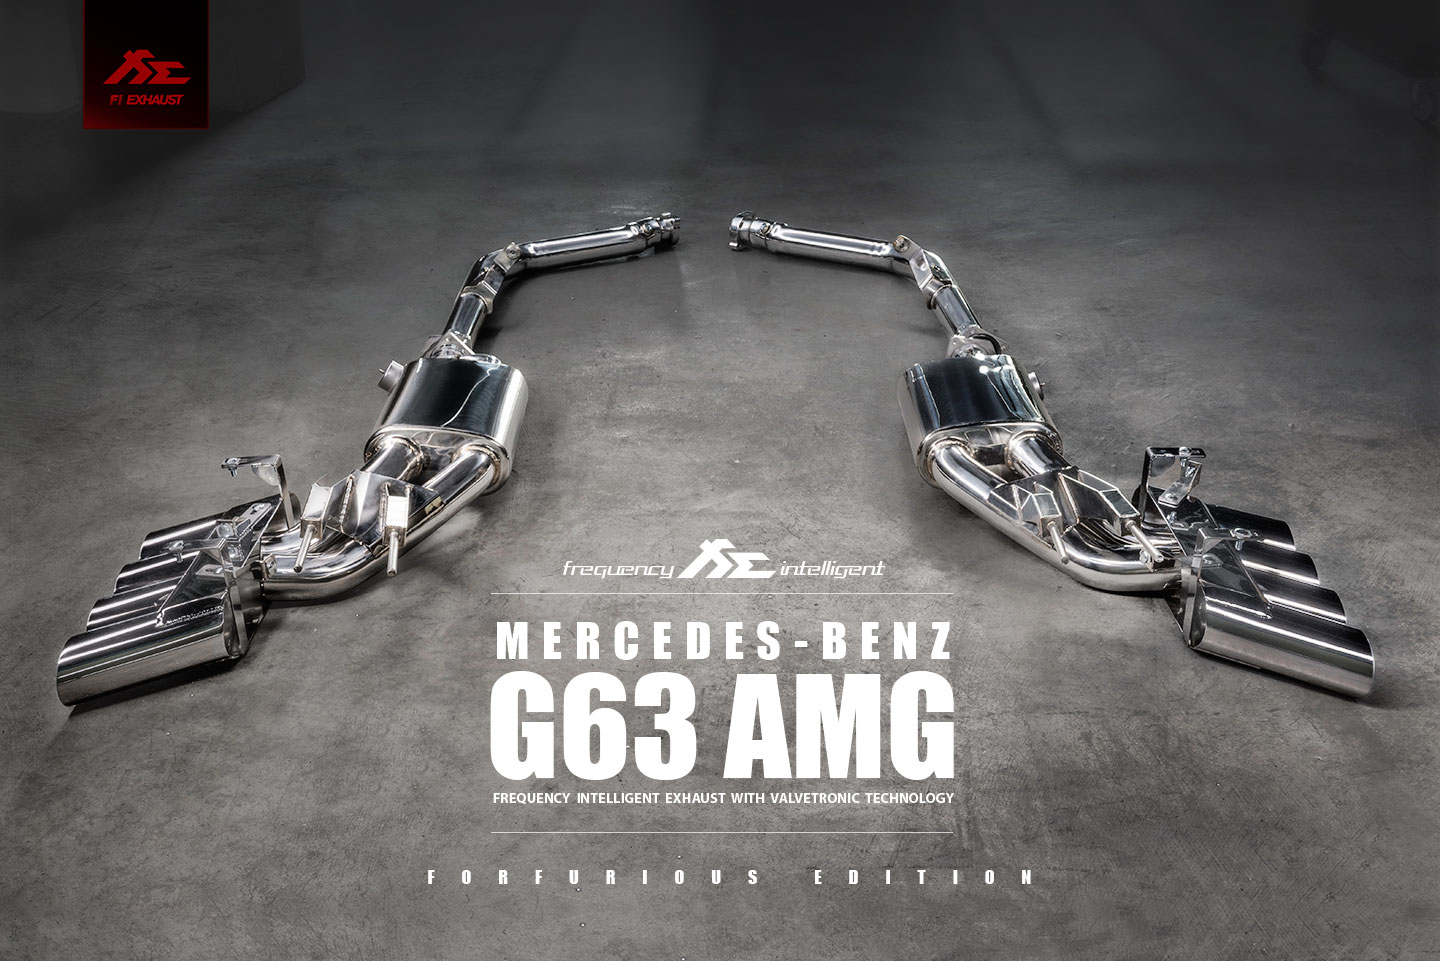 FI kipufogó Mercedes AMG G63 (W483) ForFurious Edition 2015+